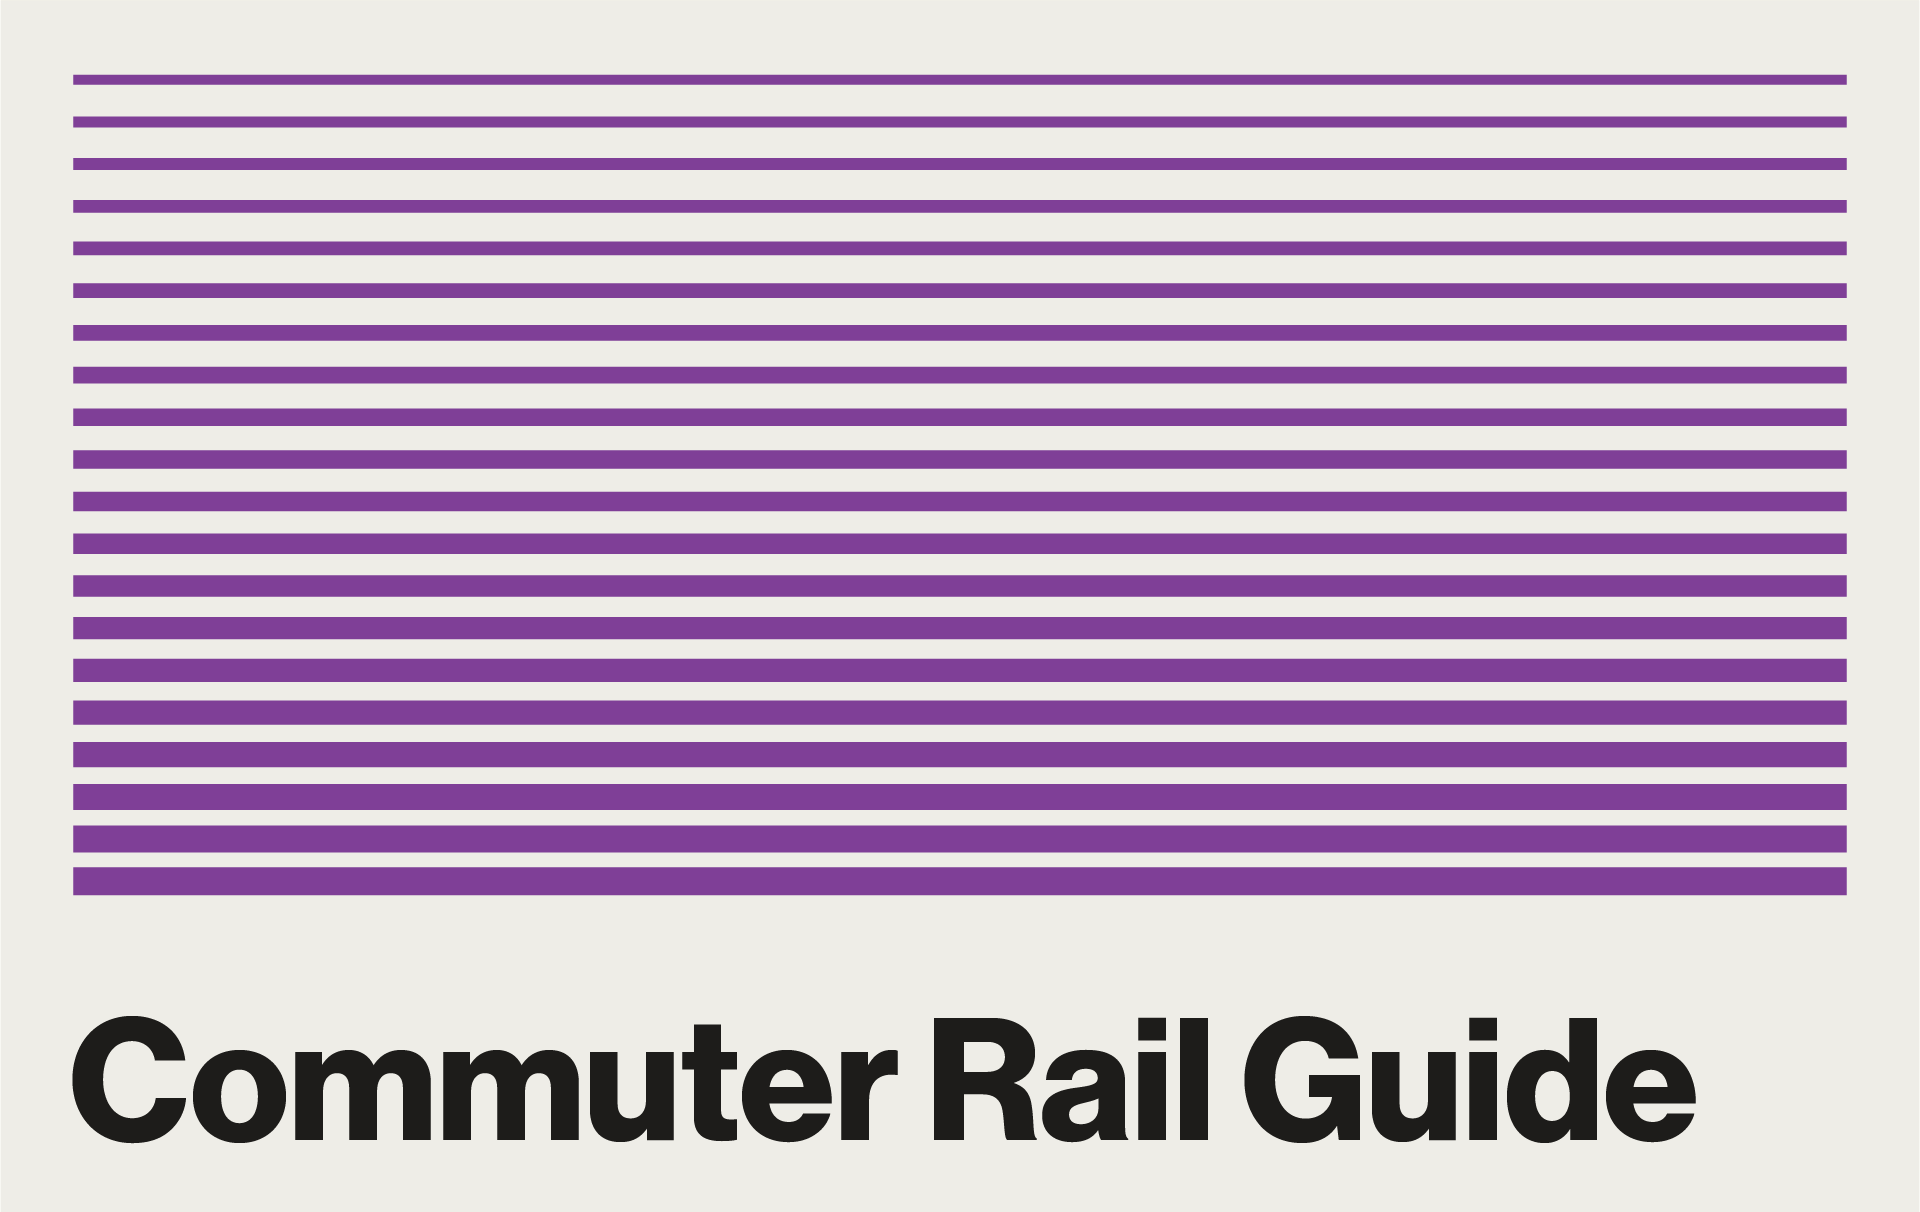 Commuter Rail Guide Clickable Graphic